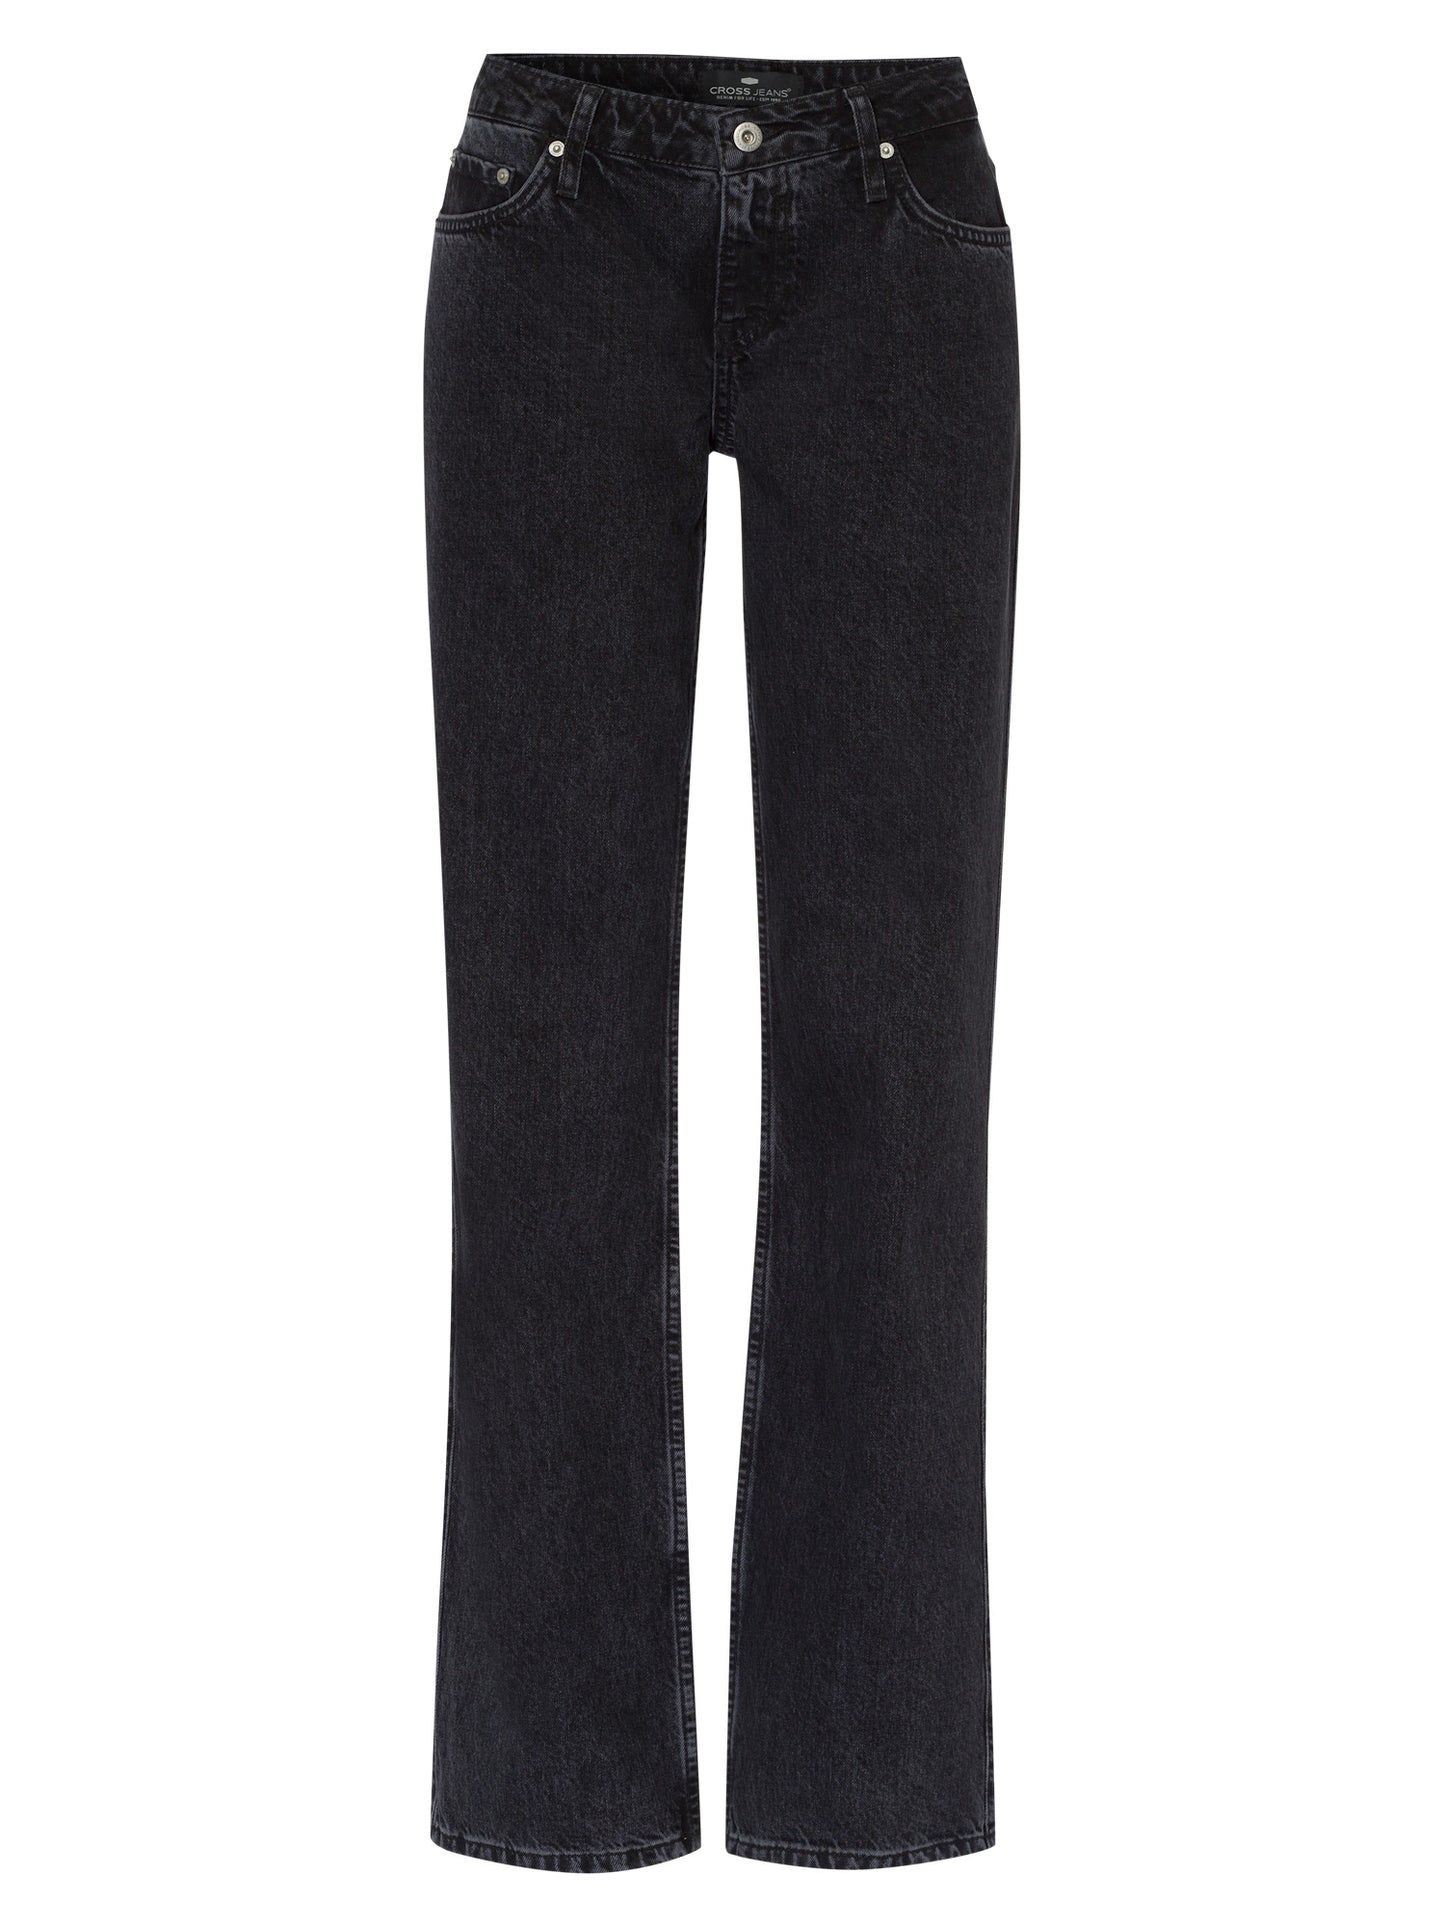 Lily women's jeans straight fit low waist in dark grey